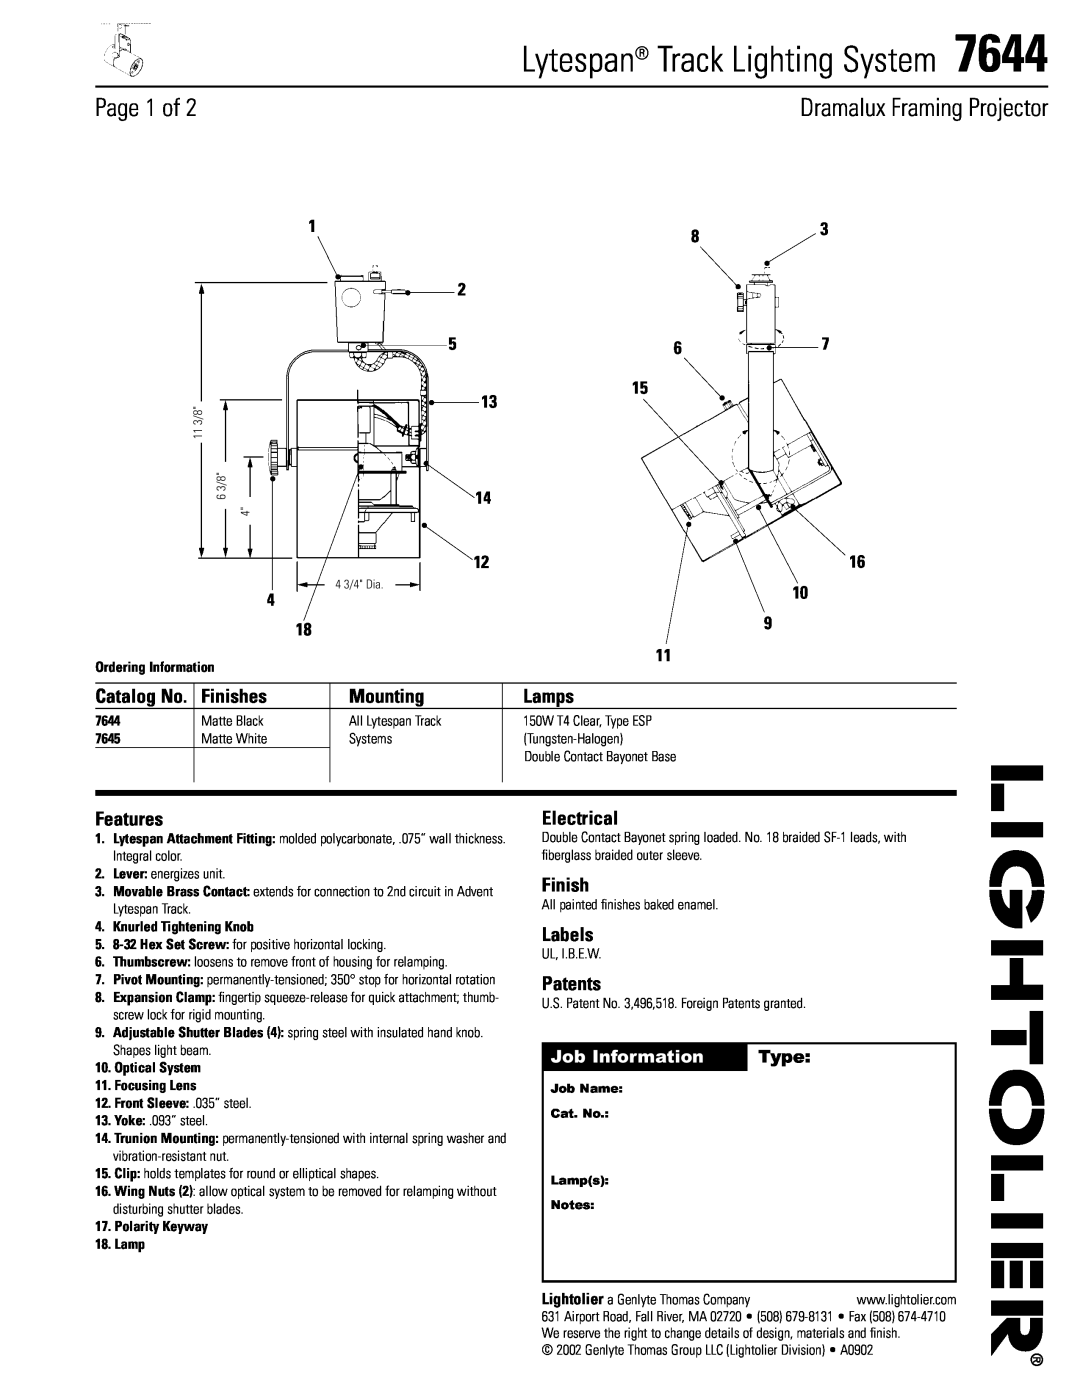 Lightolier 7644 manual Lytespan Track Lighting System, Page 1 of, Dramalux Framing Projector, Catalog No, Job Information 